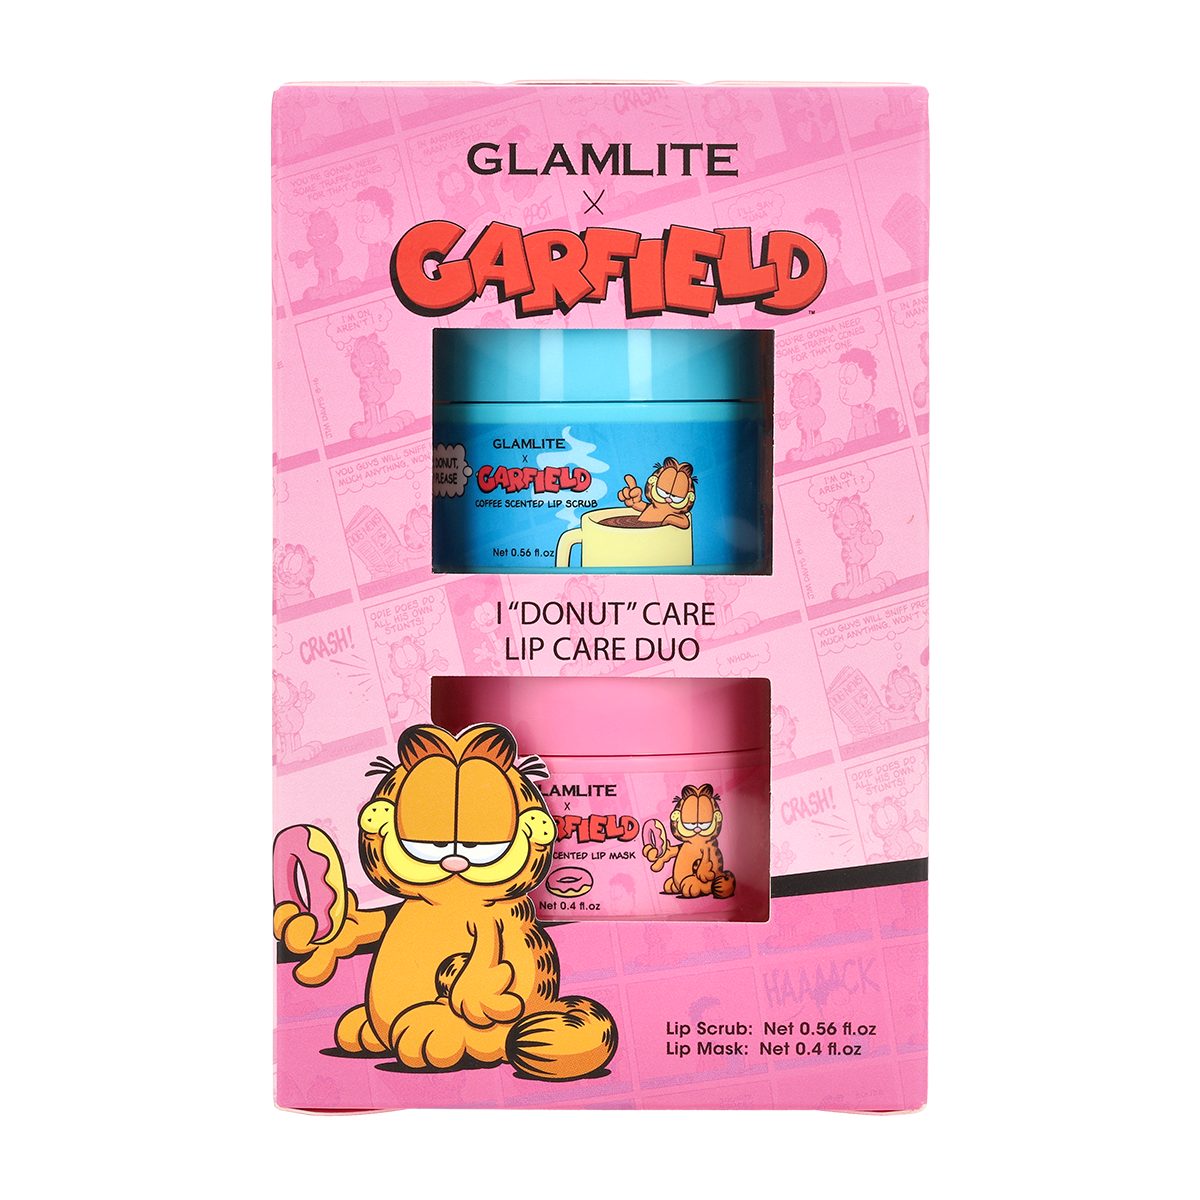 Garfield x Glamlite I Donut Care Lip Care Duo